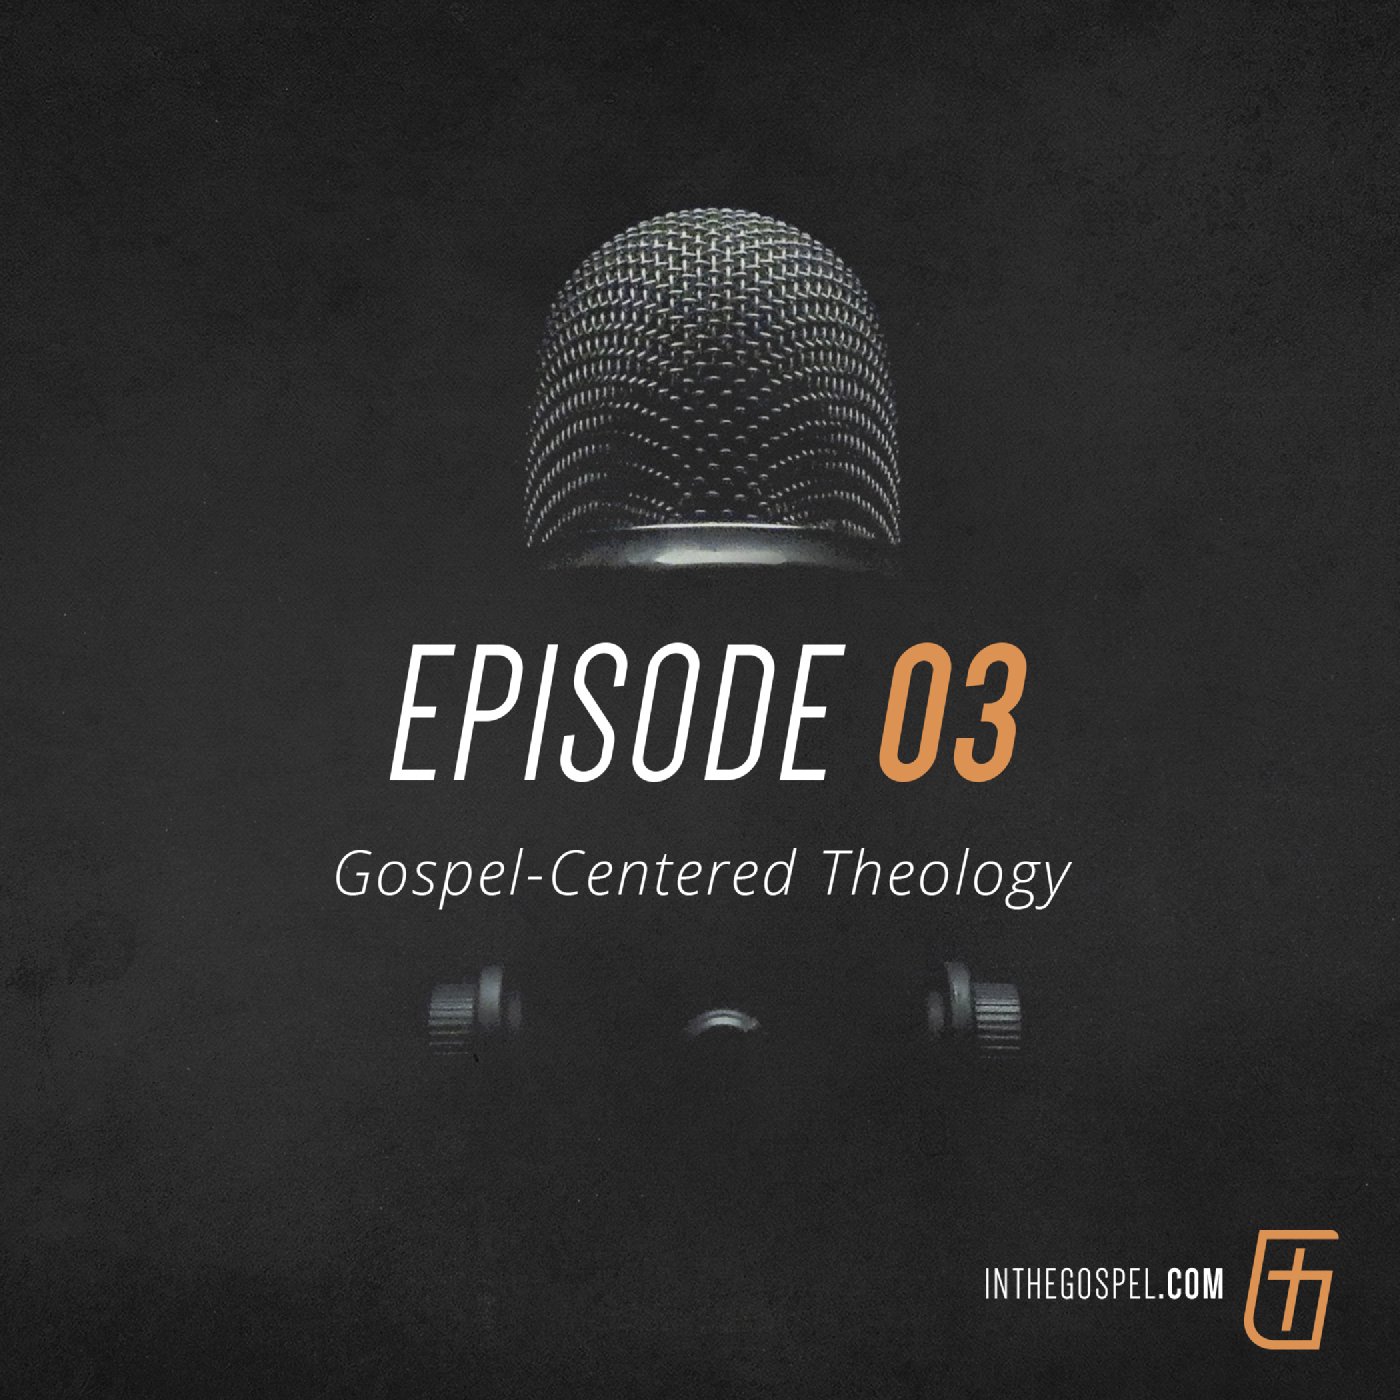 Episode 03: Gospel-Centered Theology